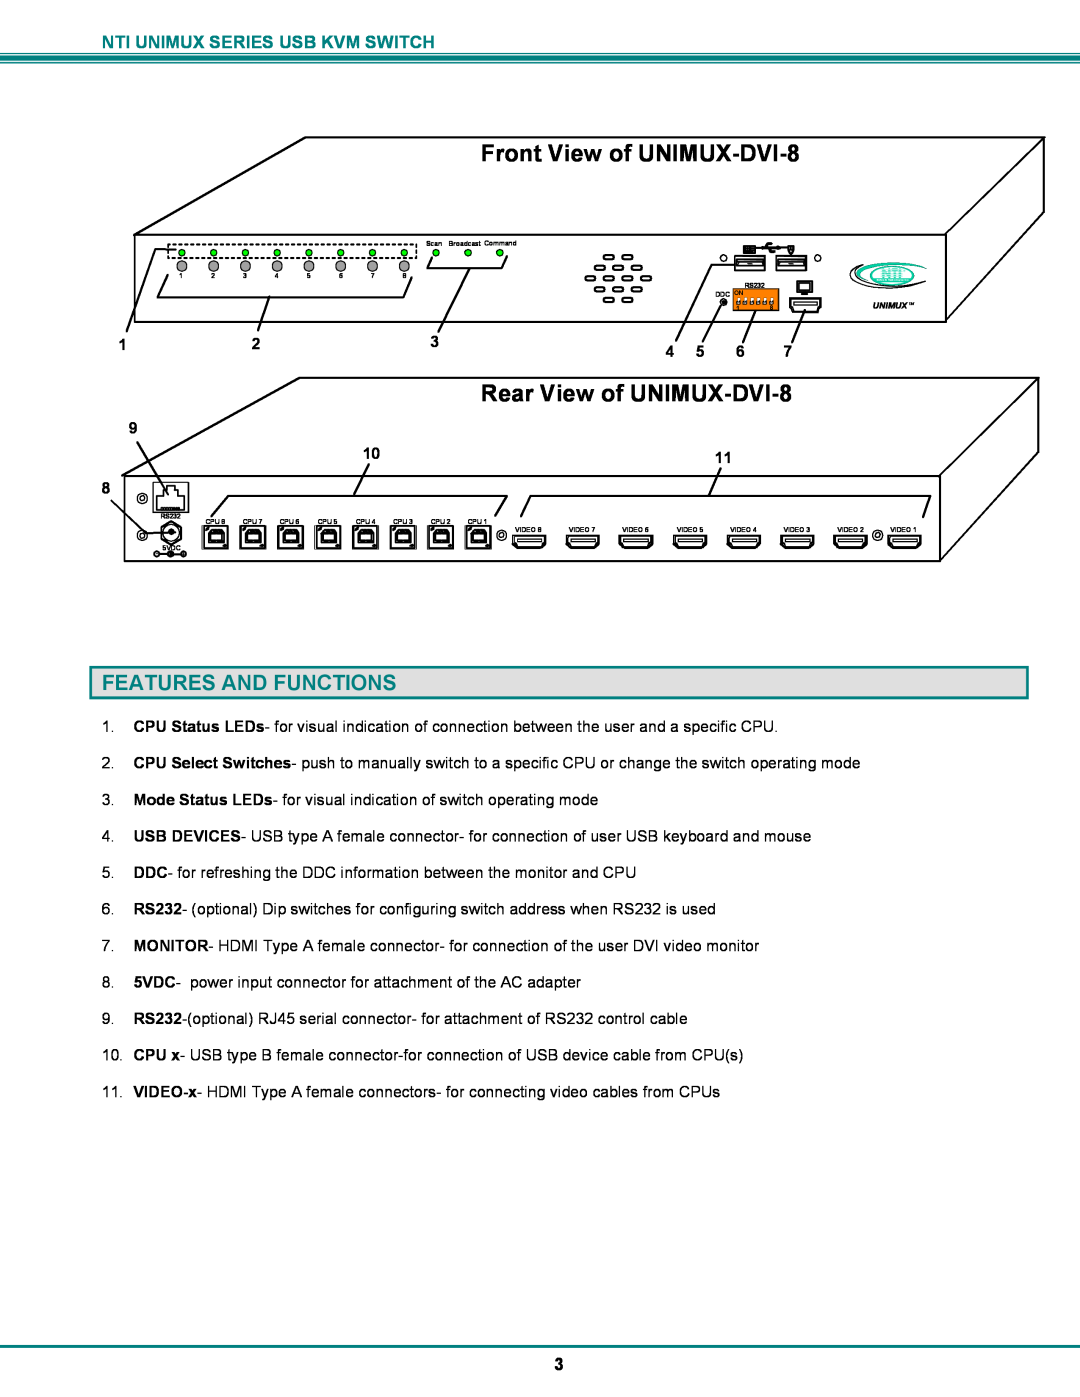 Network Technologies USB DVI KVM Front View of UNIMUX-DVI-8, Rear View of UNIMUX-DVI-8, Features And Functions 